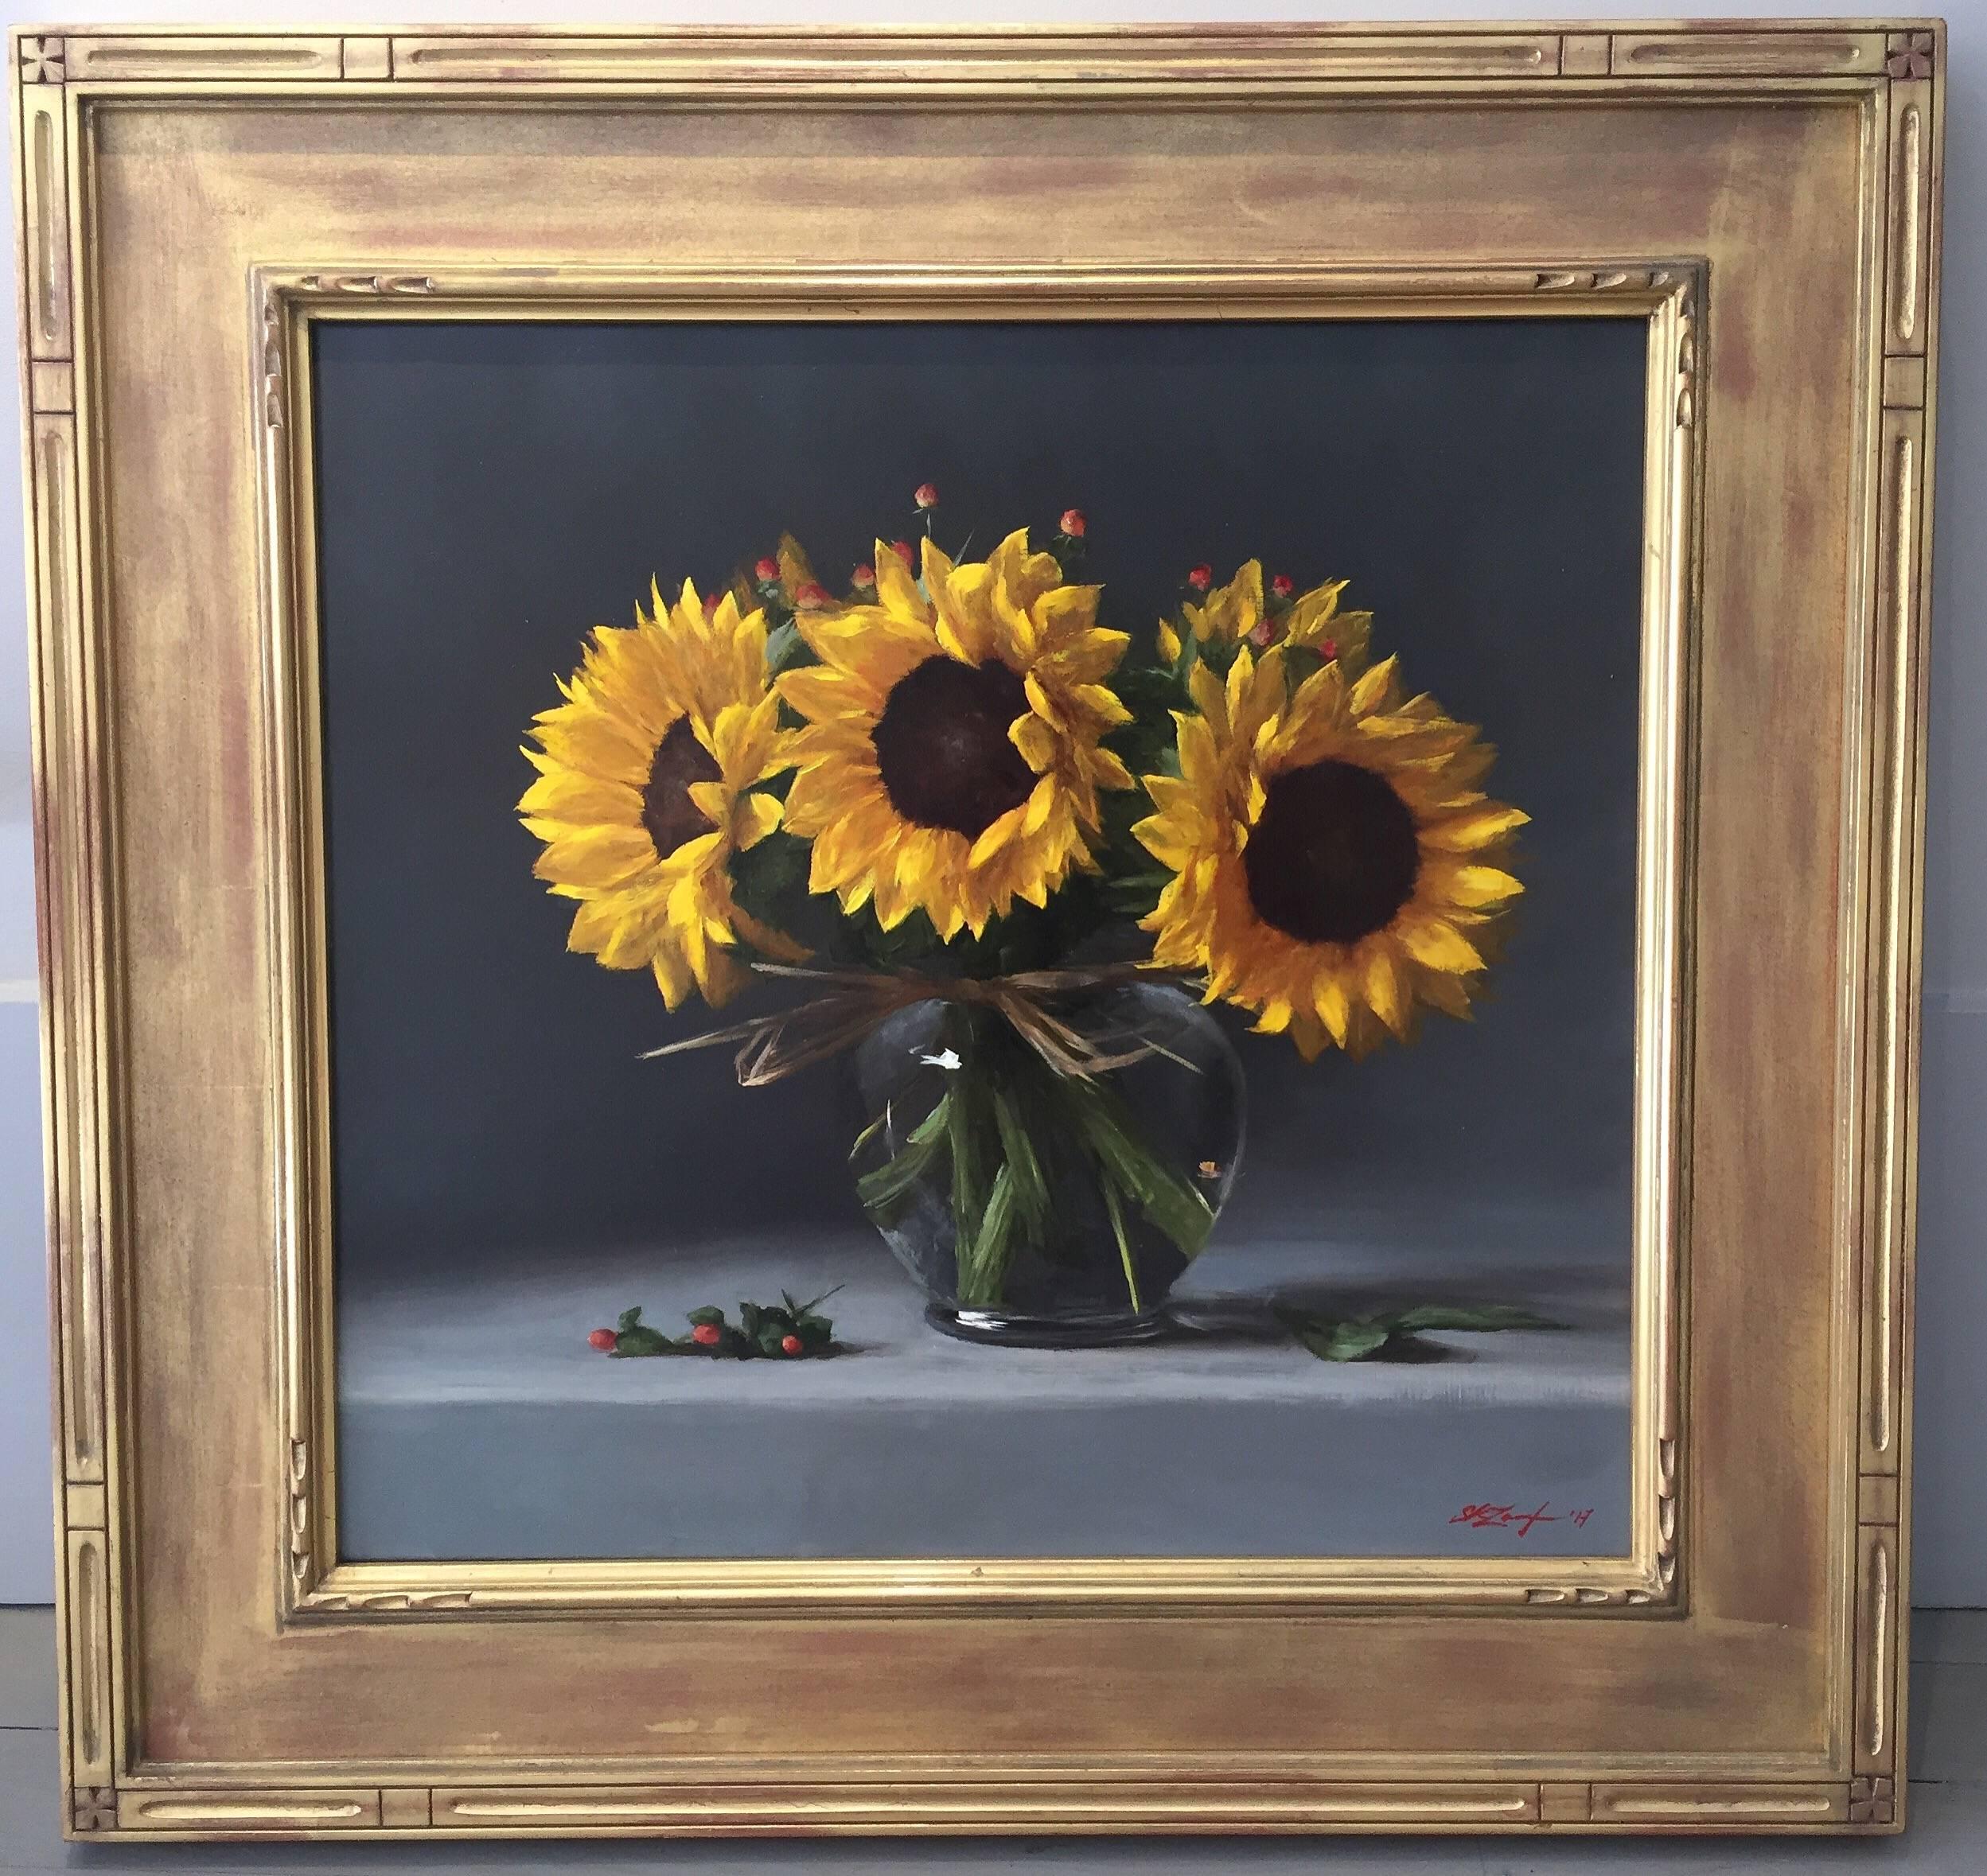 Sunflowers - Painting by Sarah Lamb